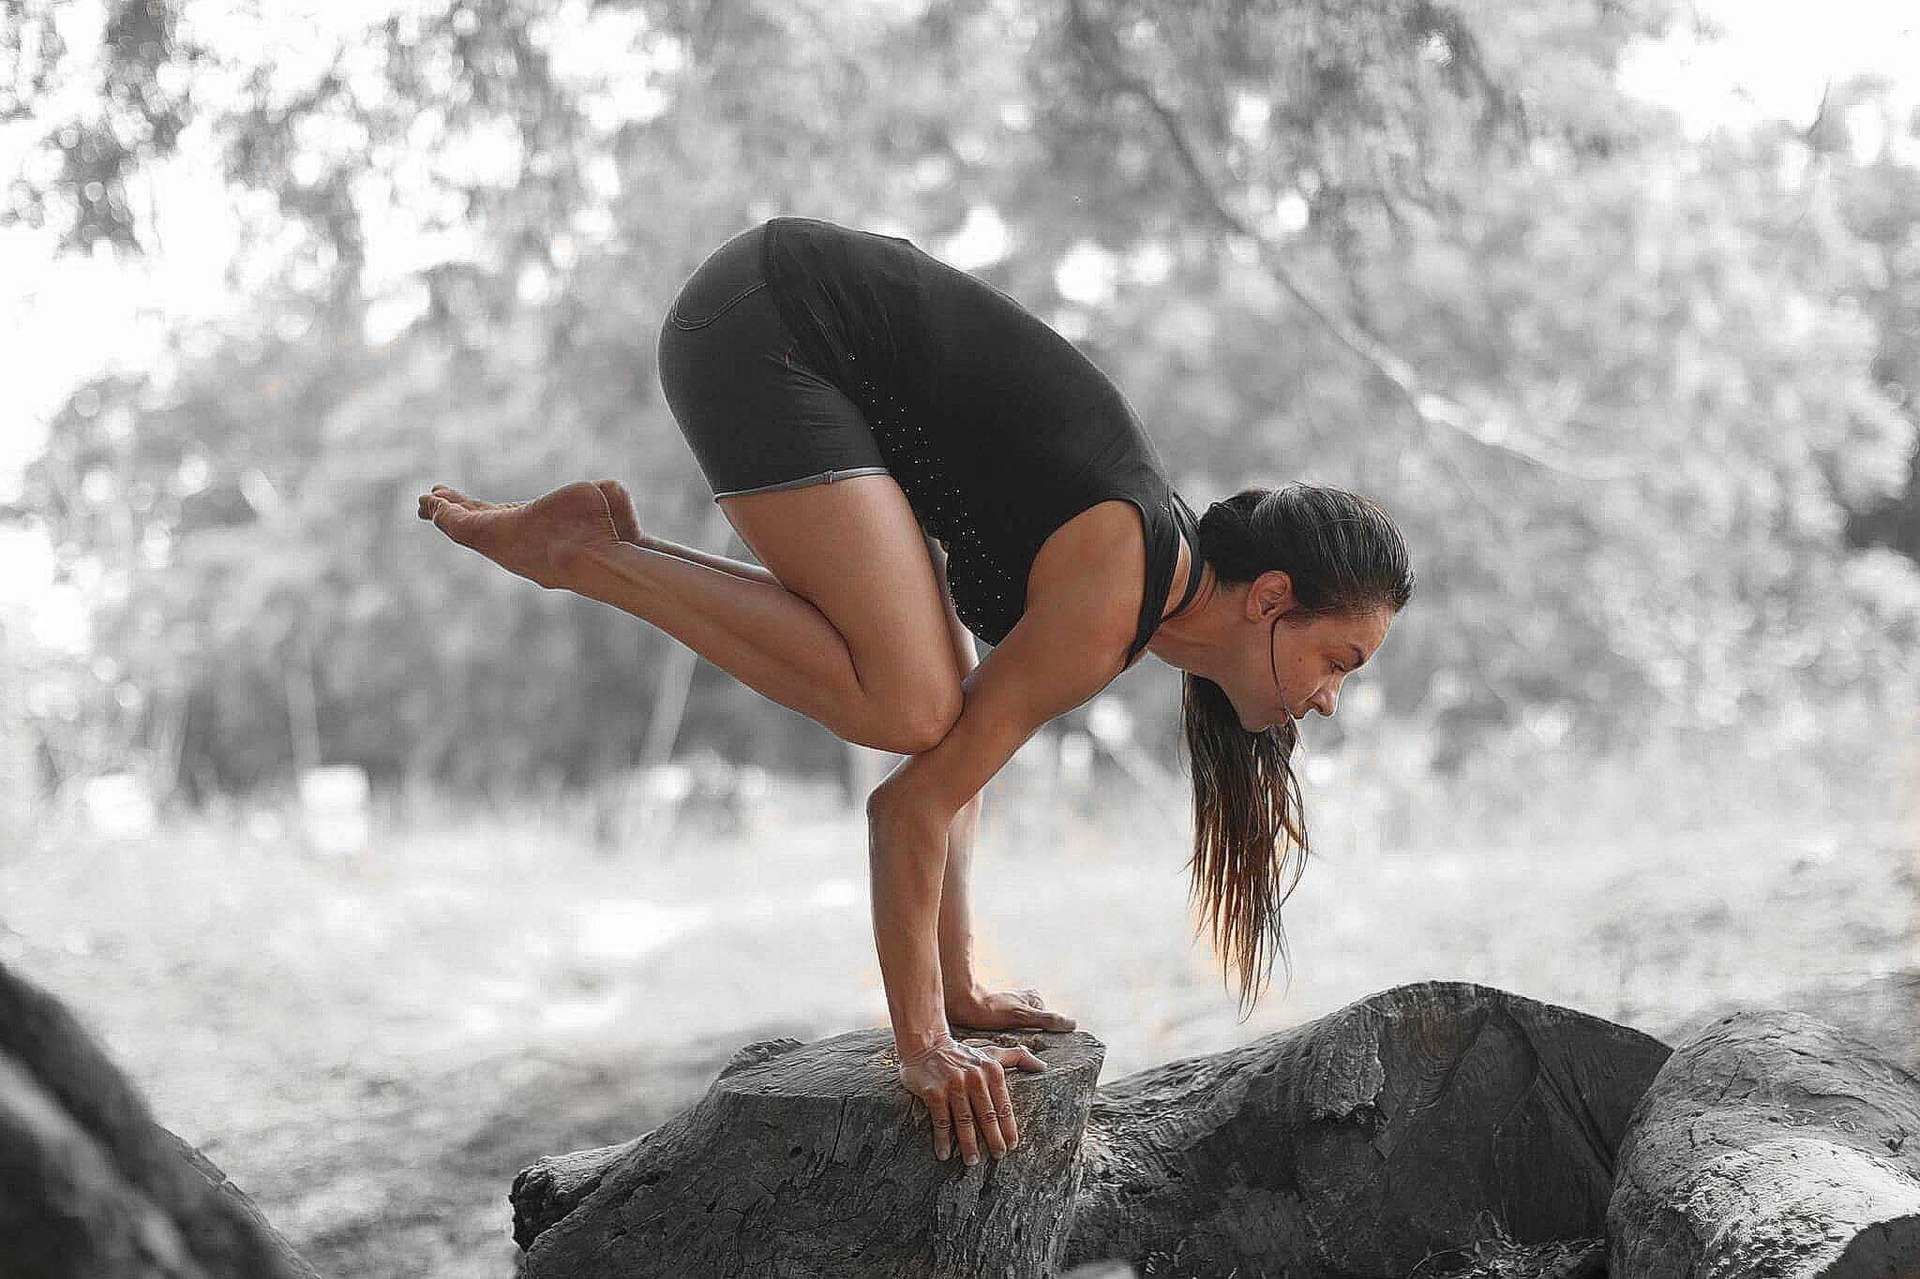 crow pose yoga tutorial | bakasana for beginners - YouTube